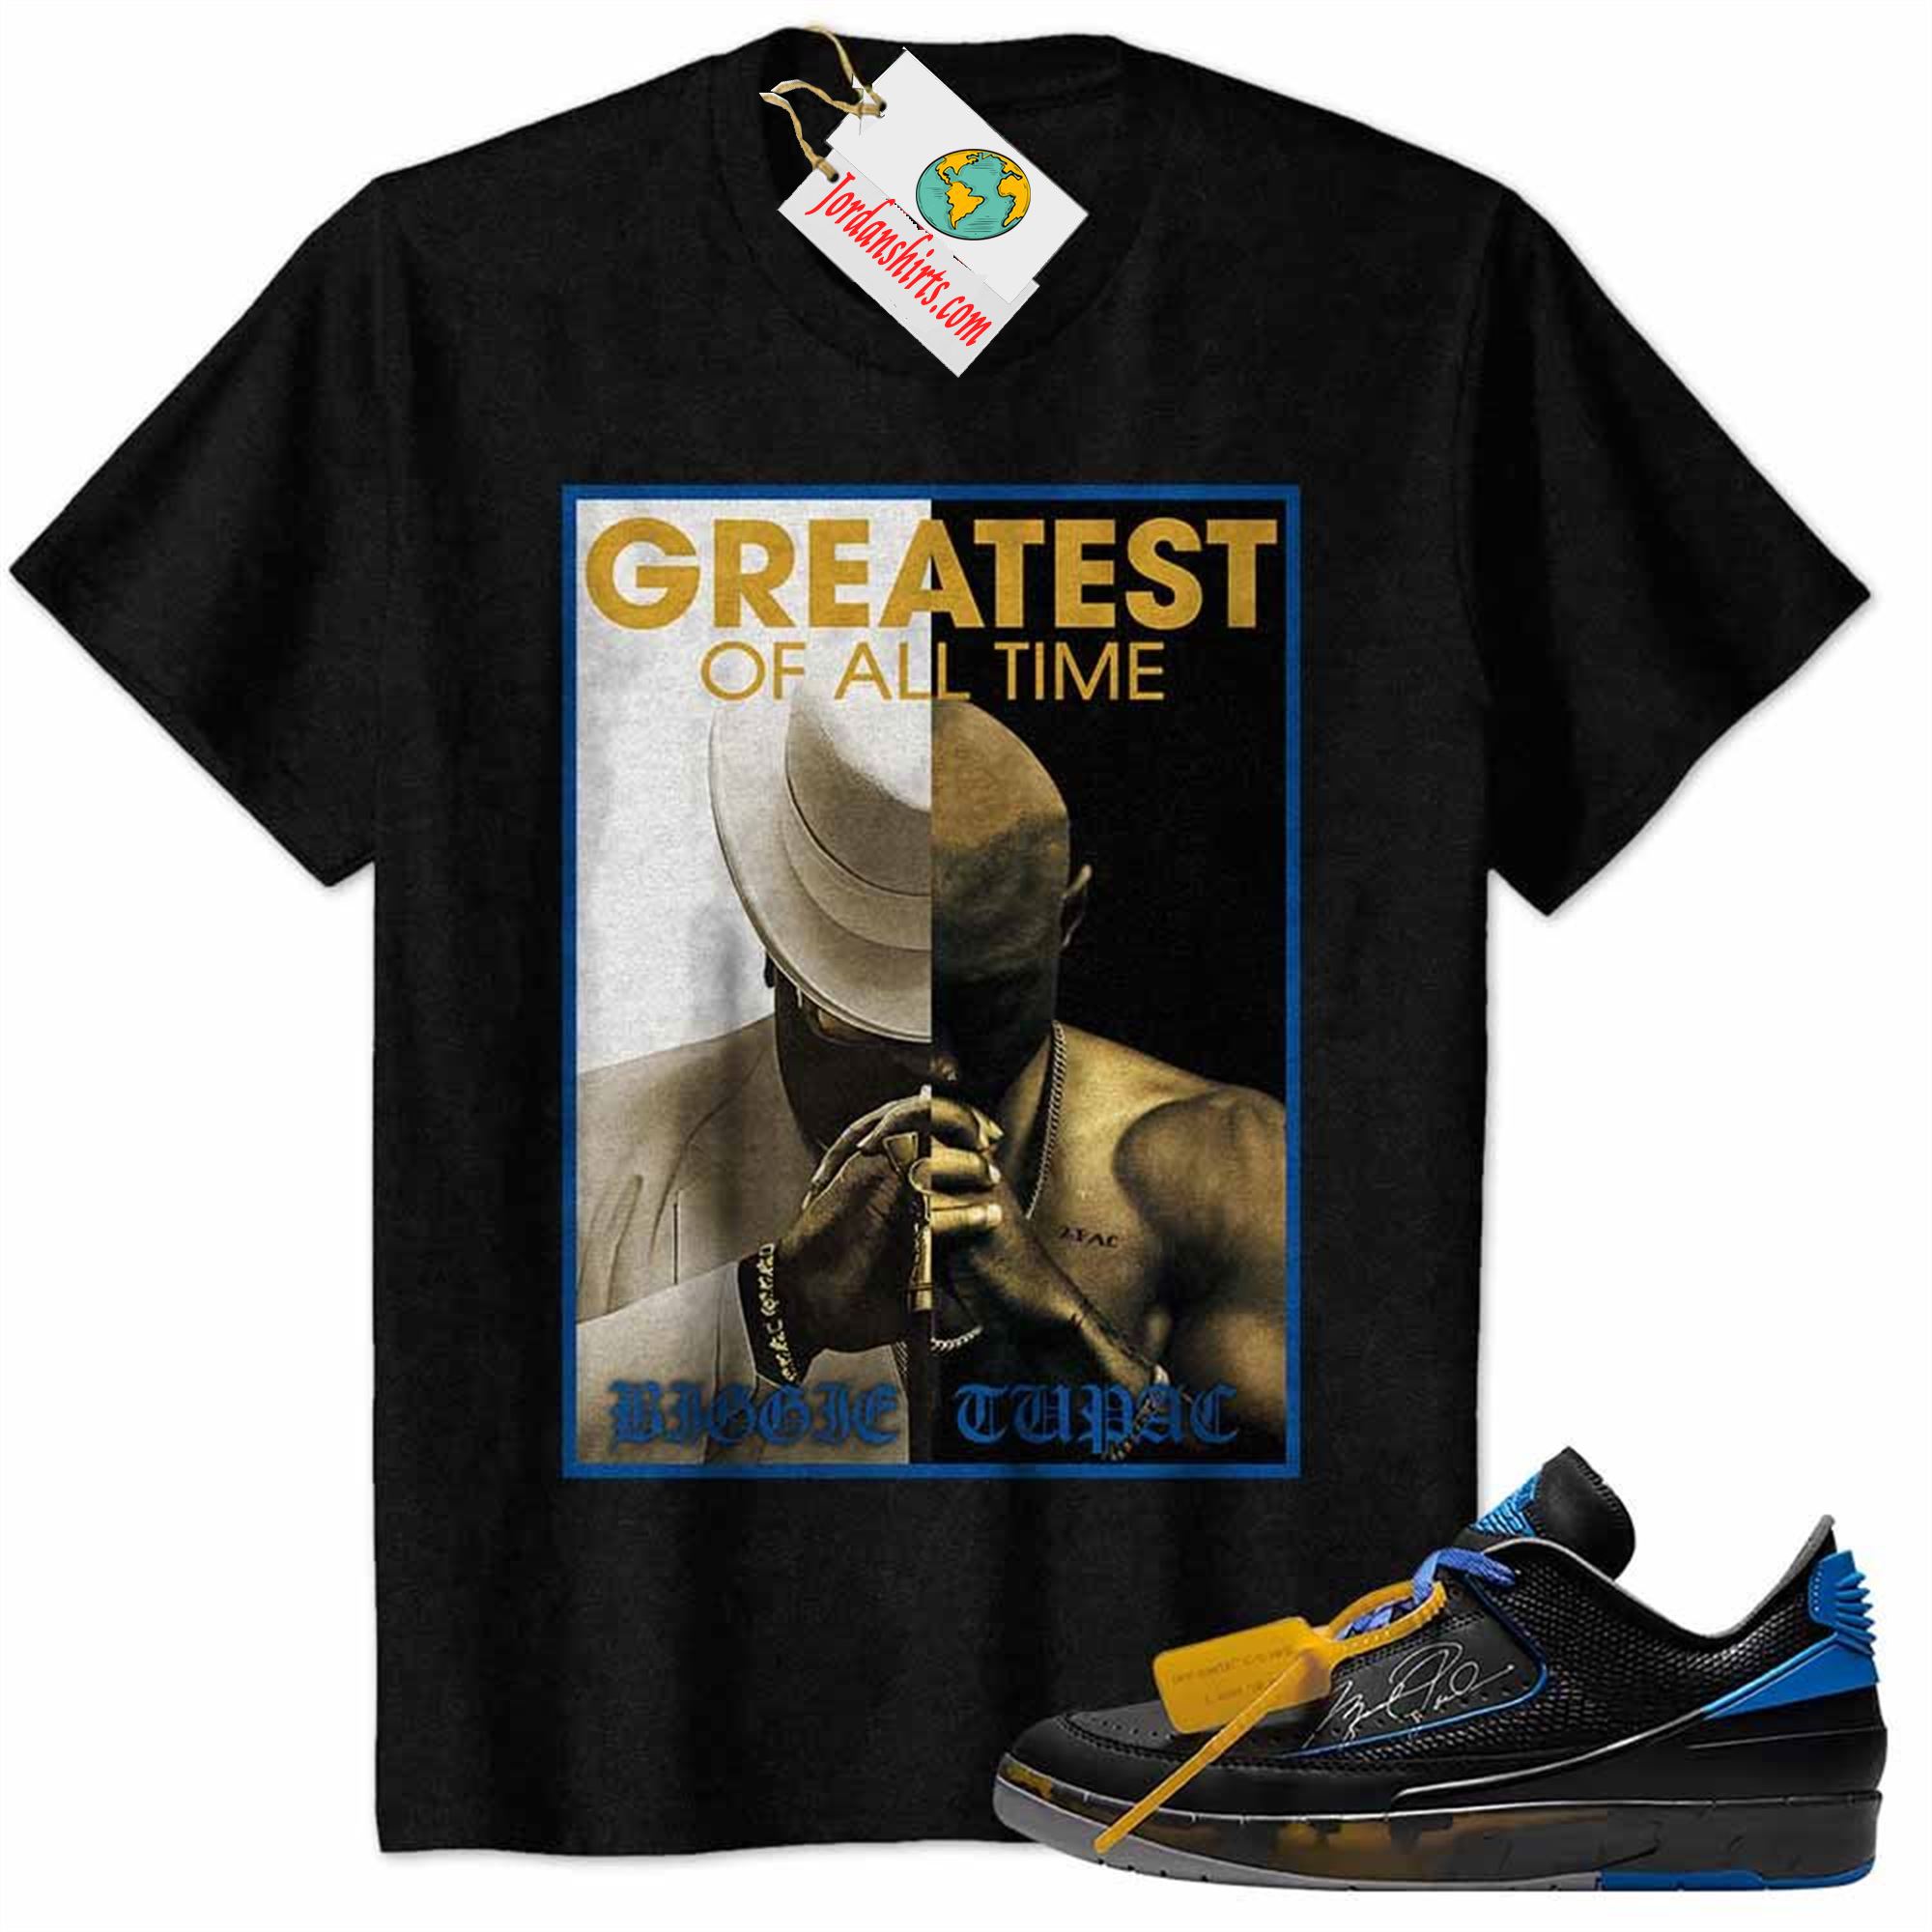 Jordan 2 Shirt, Tupac Shakur Notorious Big Biggie 2pac Greatest Of All Time Black Air Jordan 2 Low X Off-white Black And Varsity Royal 2s Plus Size Up To 5xl